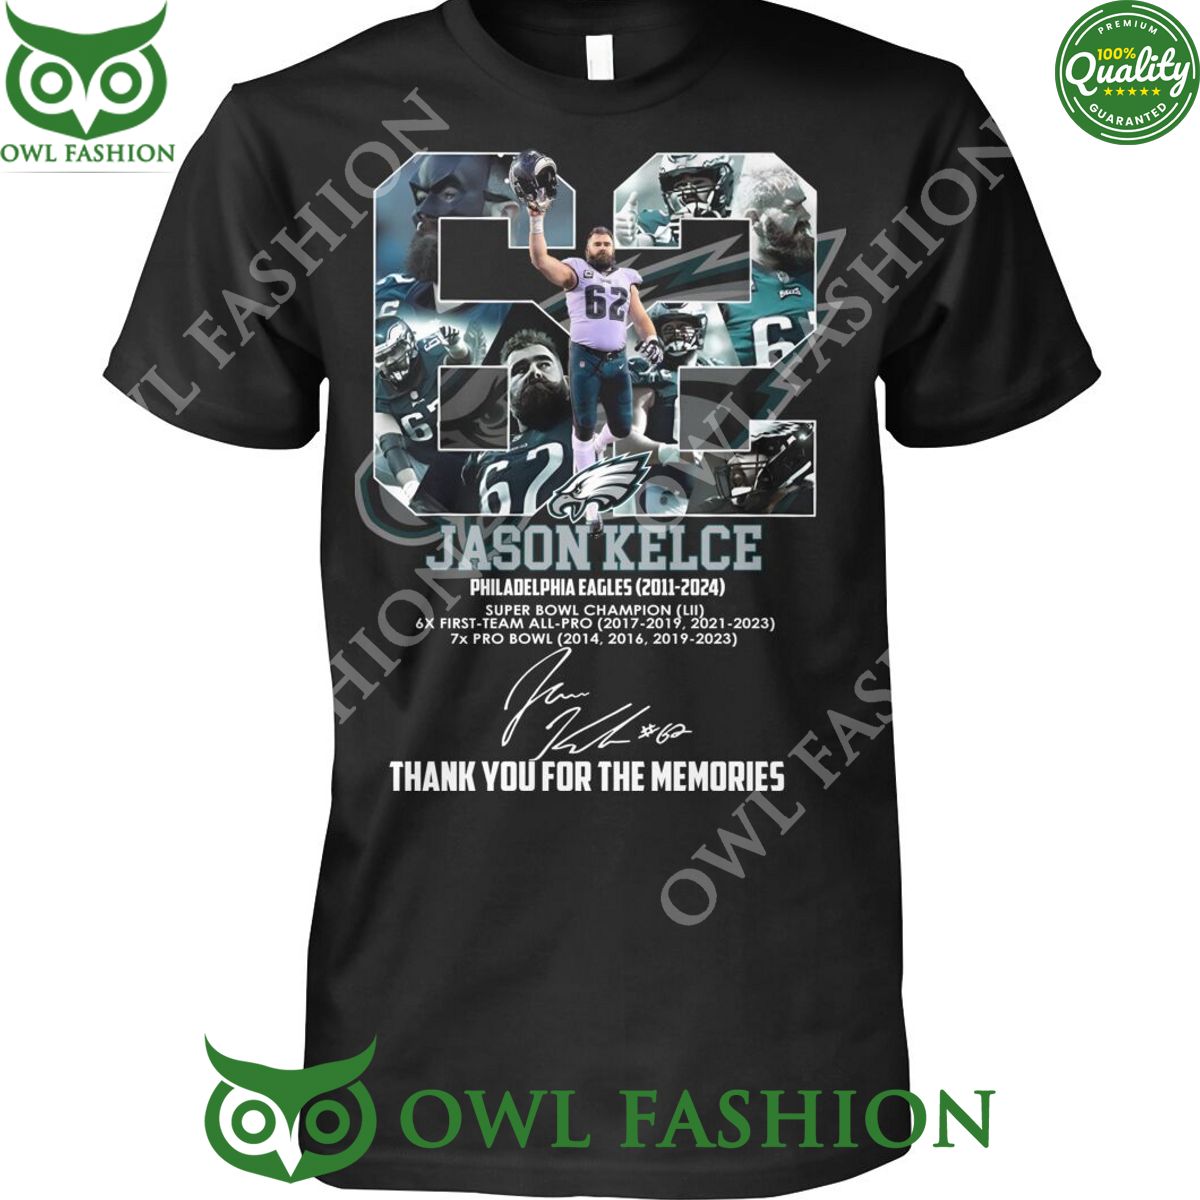 Jason Kelce Legend retired 2011 2024 Thank you Memories Philadelphia Eagles t shirt